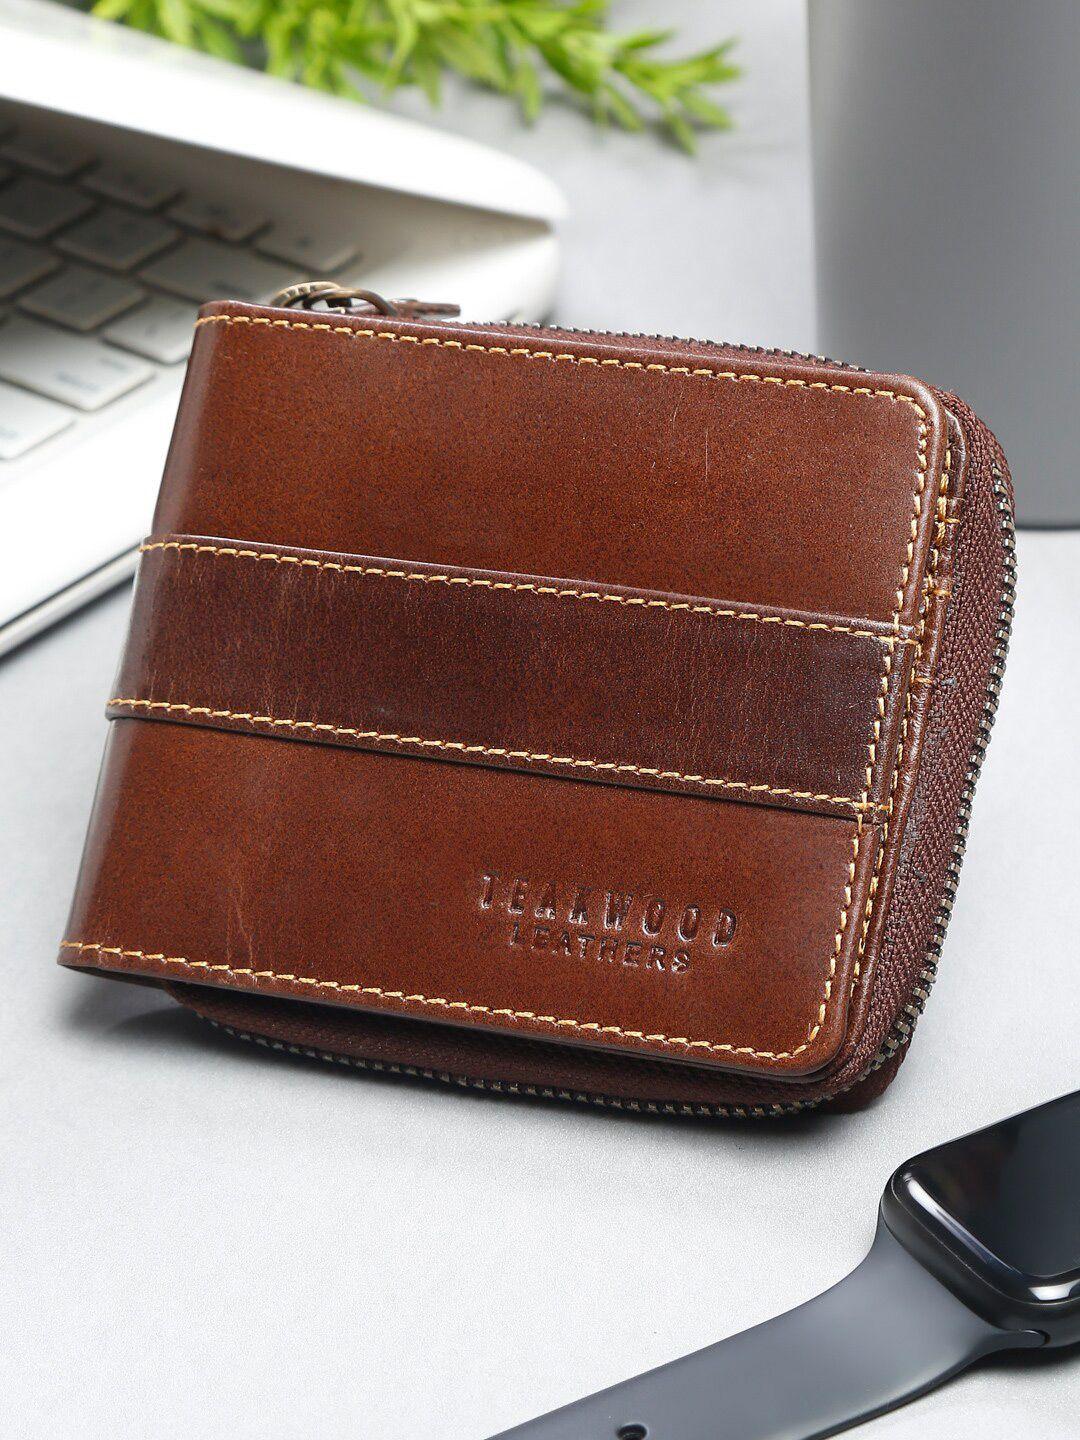 teakwood leathers men leather zip around wallet